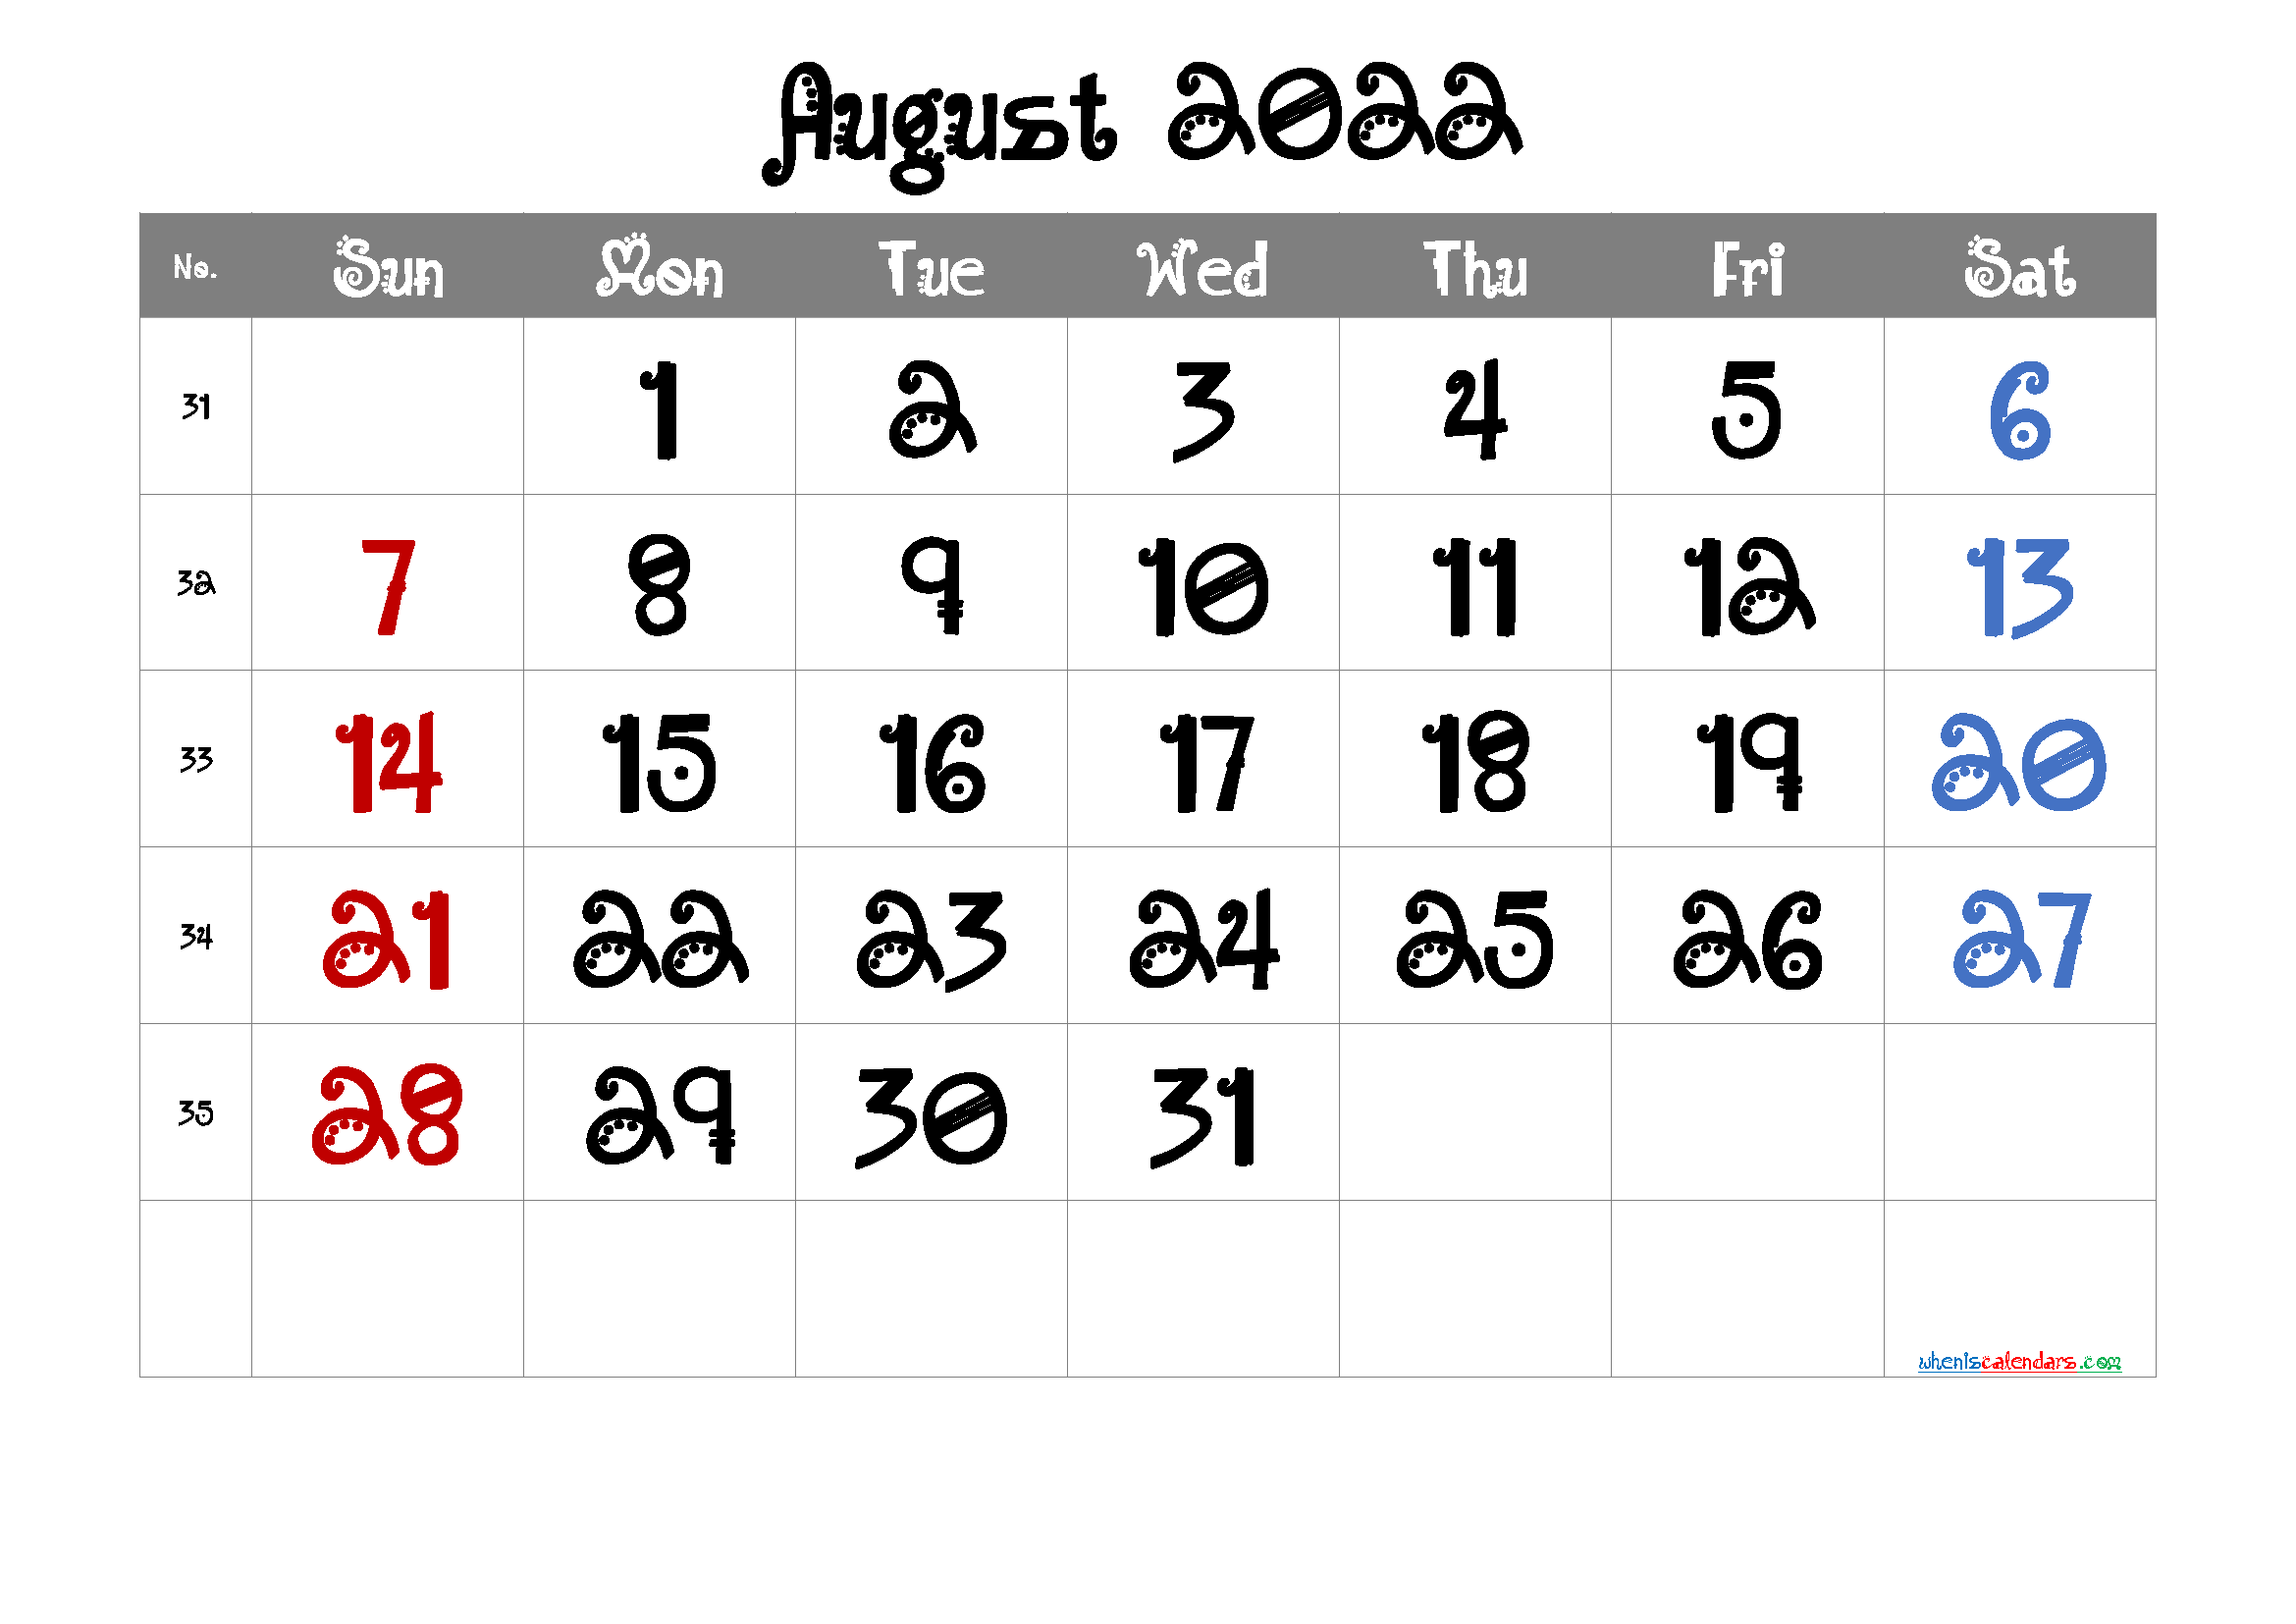 Cute August 2022 Calendar